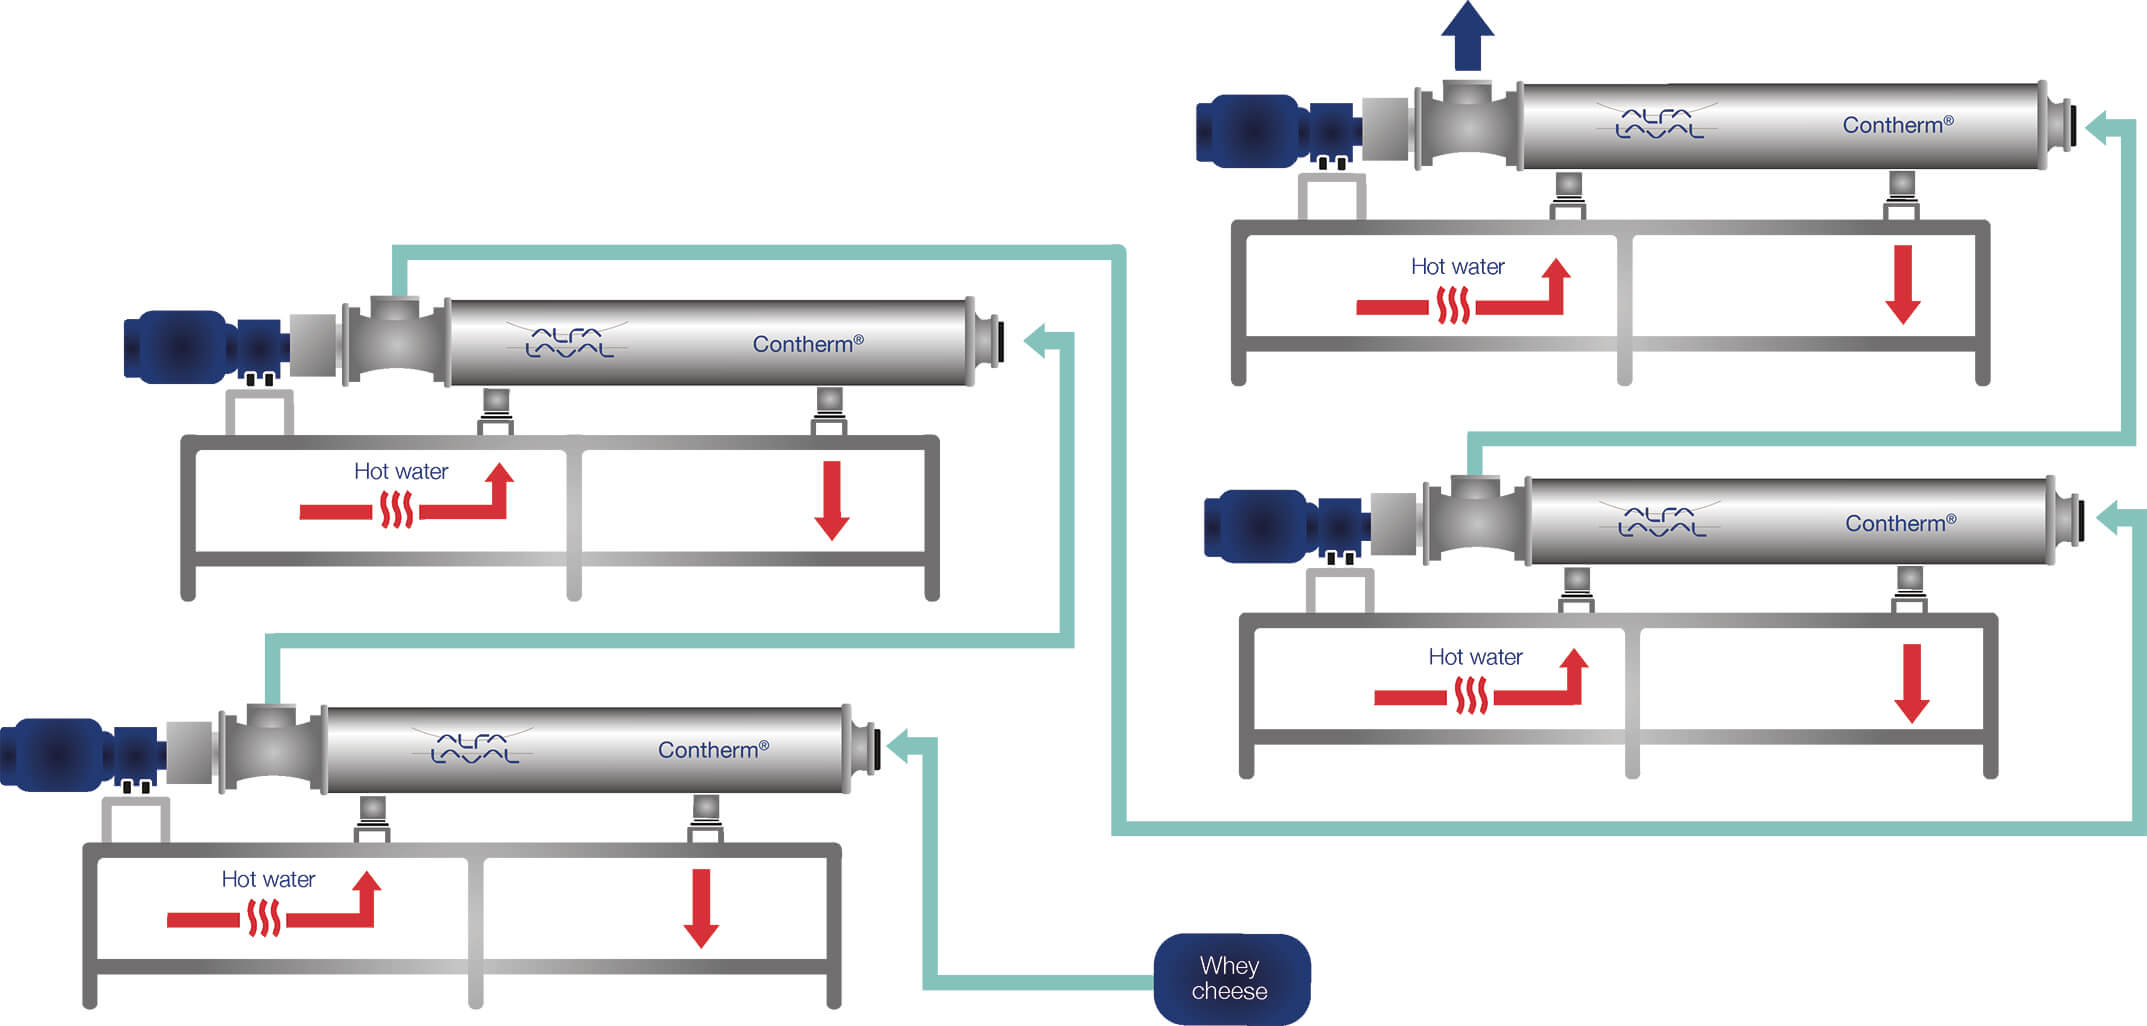 Contherm system illustration process flow1